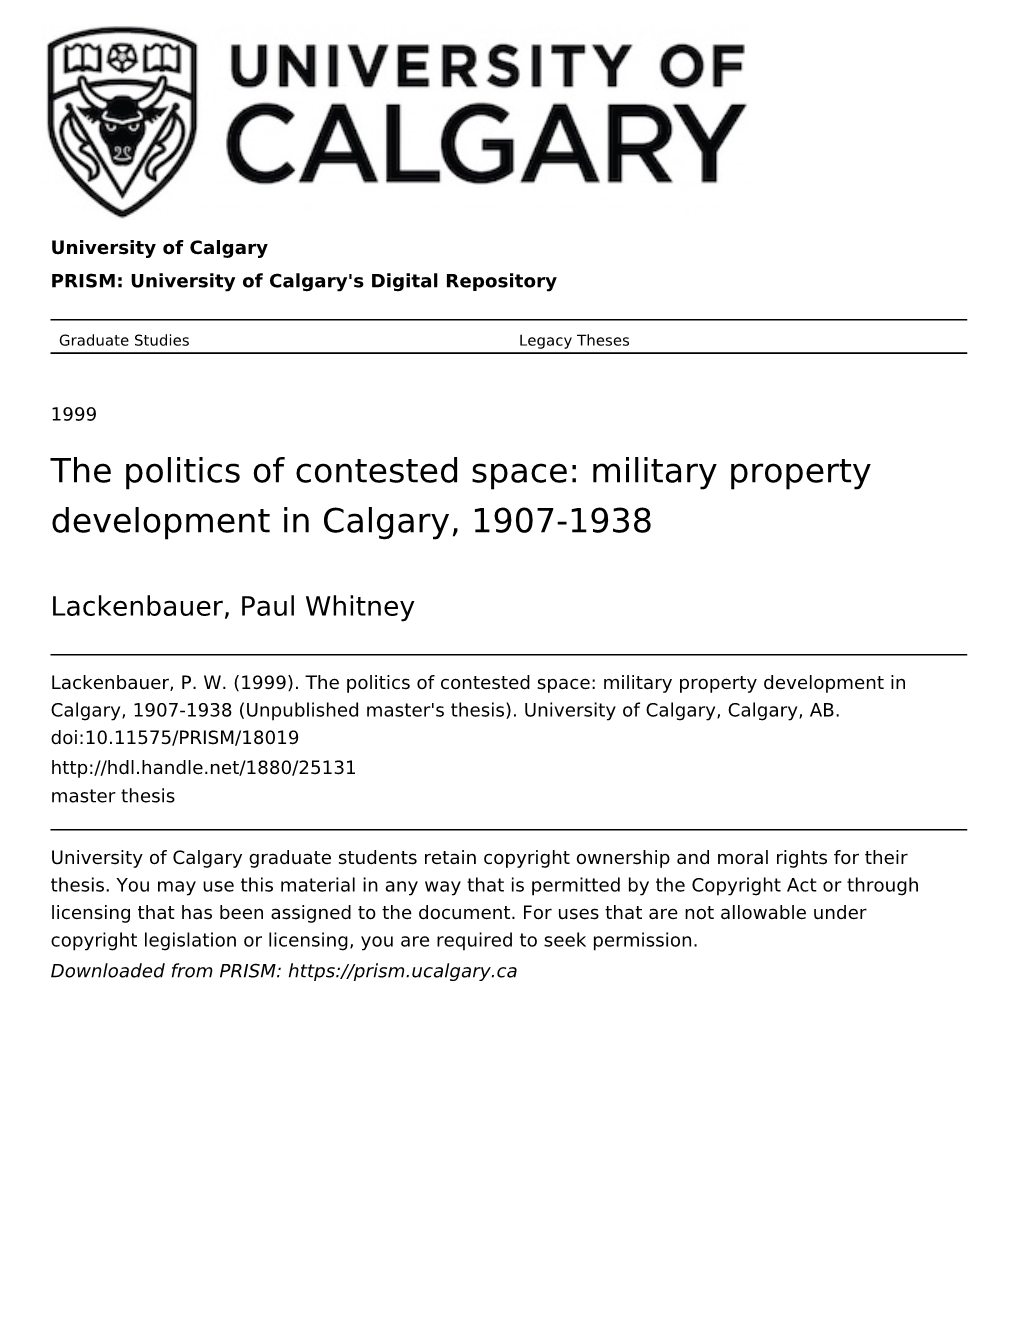 Military Property Development in Calgary, 1907-1938